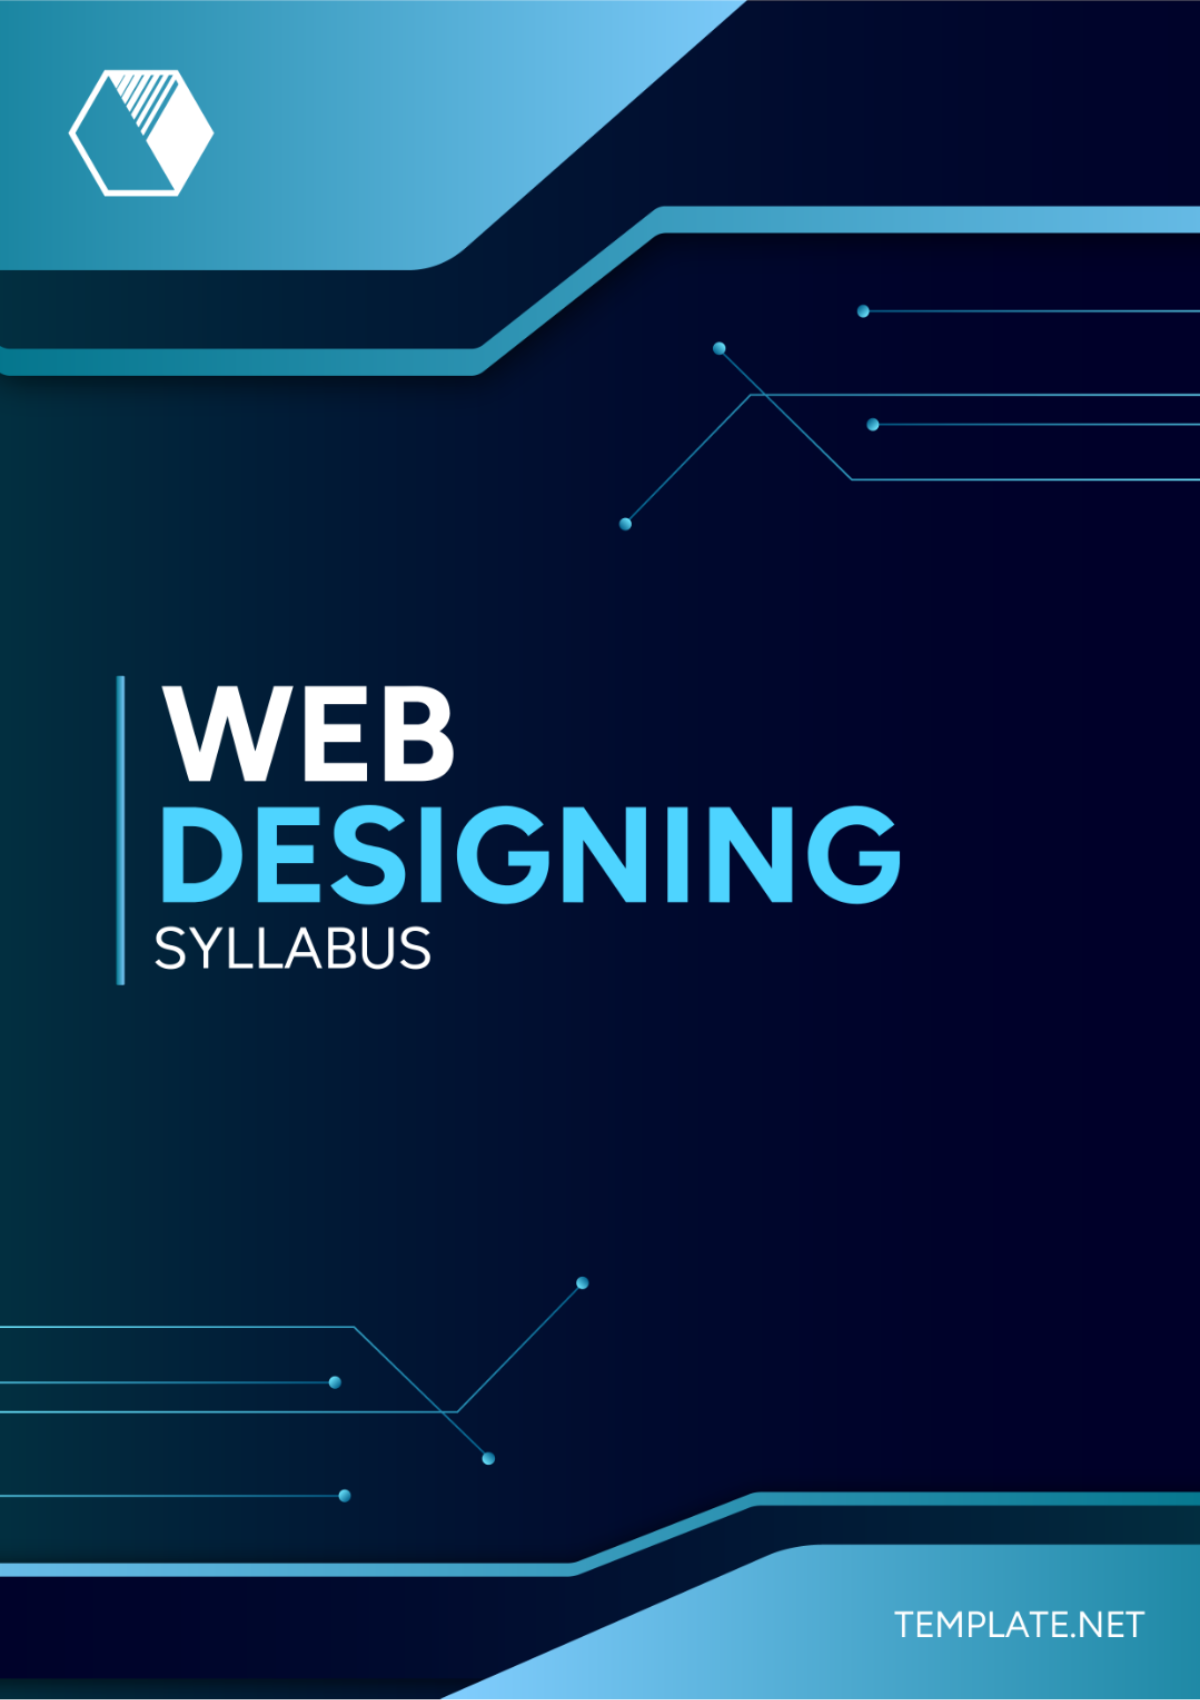 Web Designing Course Syllabus Template